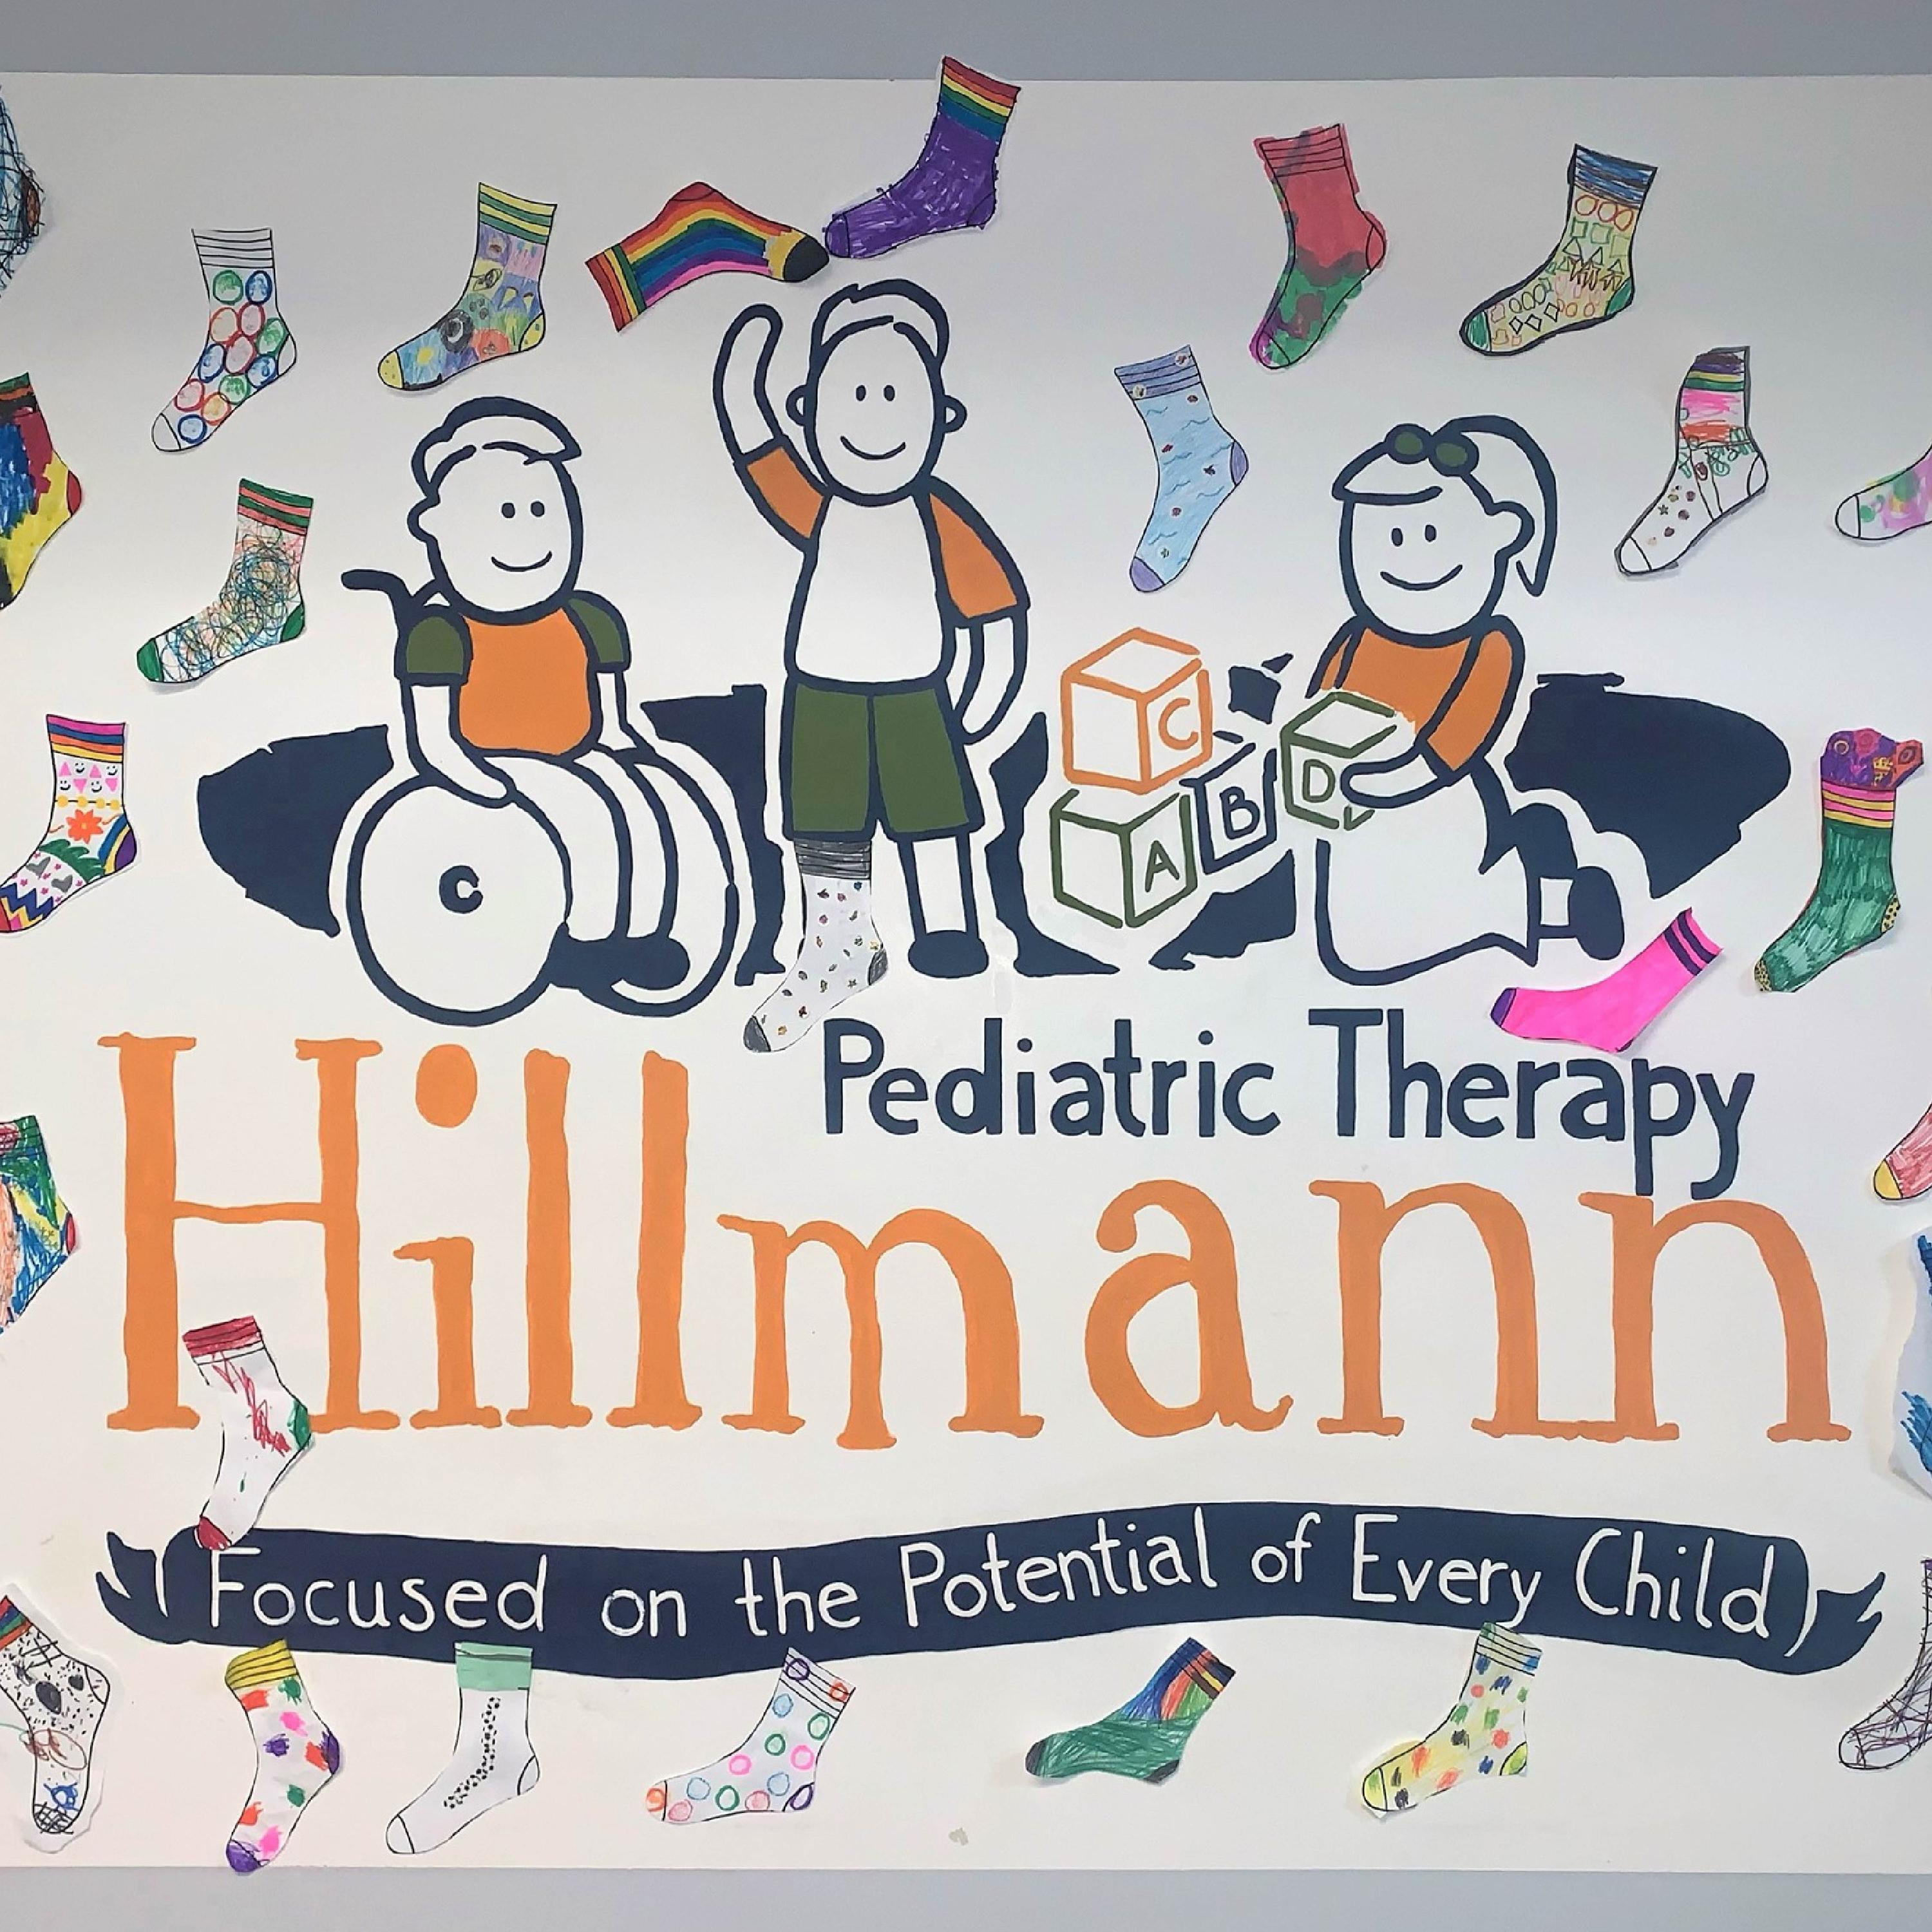 Hillmann Pedatric Therapy-08